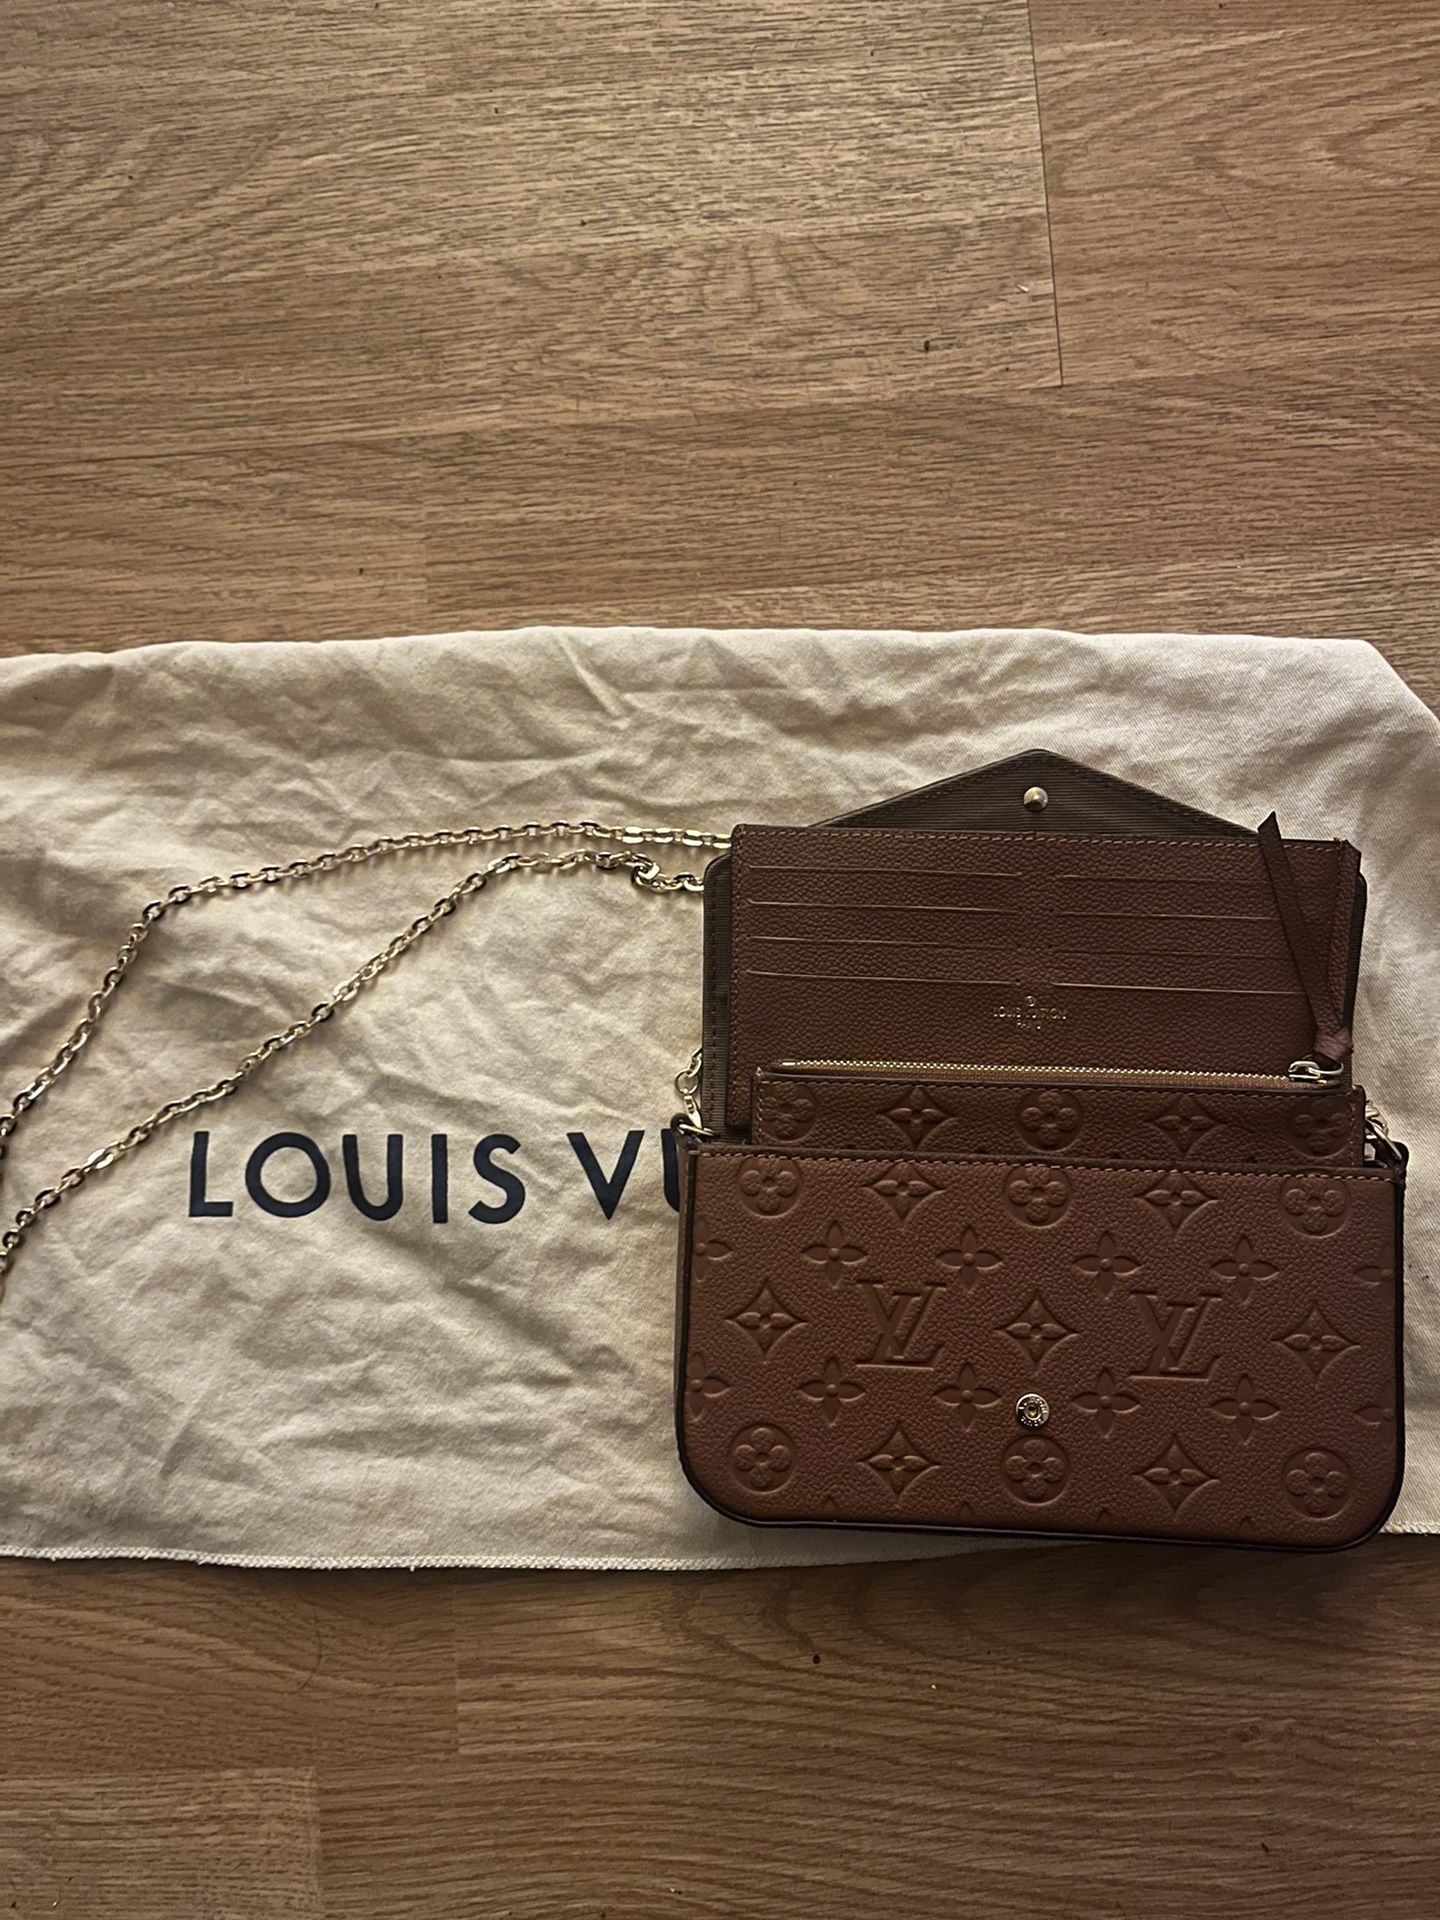 Louis Vuitton Felicie Cross Body for Sale in Los Angeles, CA - OfferUp